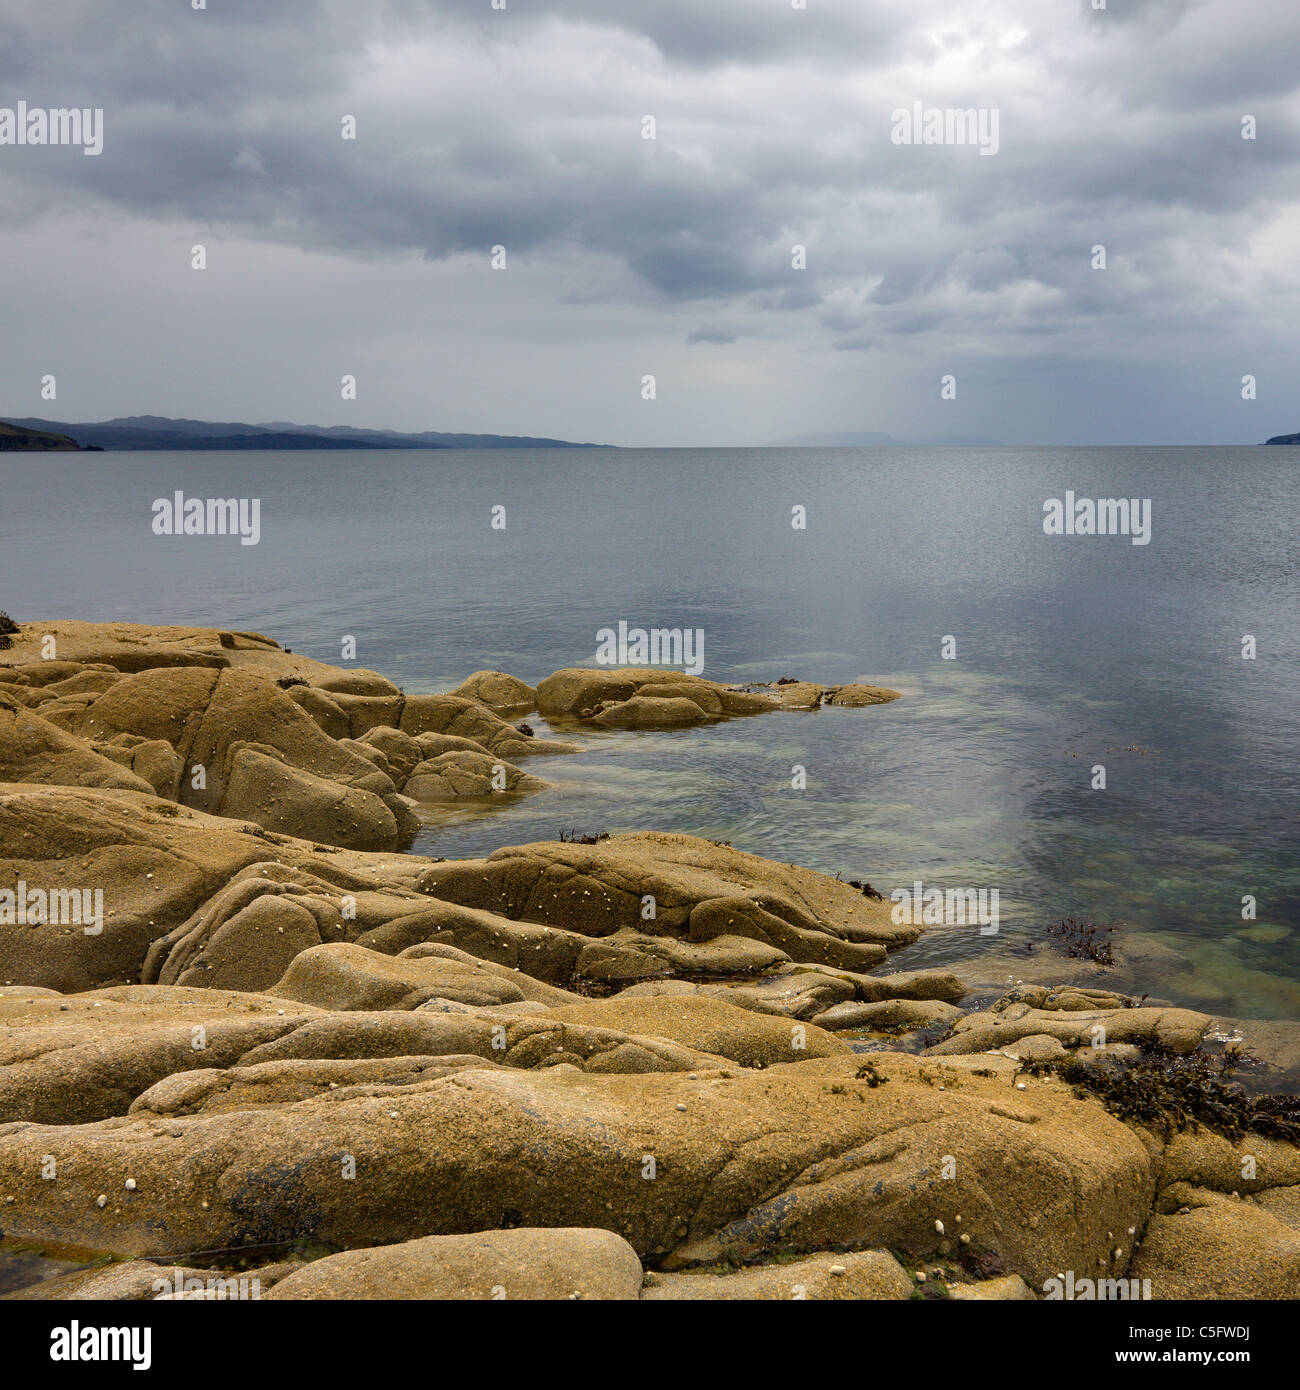 Rocky shoreline, calm sea loch with cloudy, threatening grey sky, Camas Malag, Torrin,Isle of Skye, Scotland, UK Stock Photo